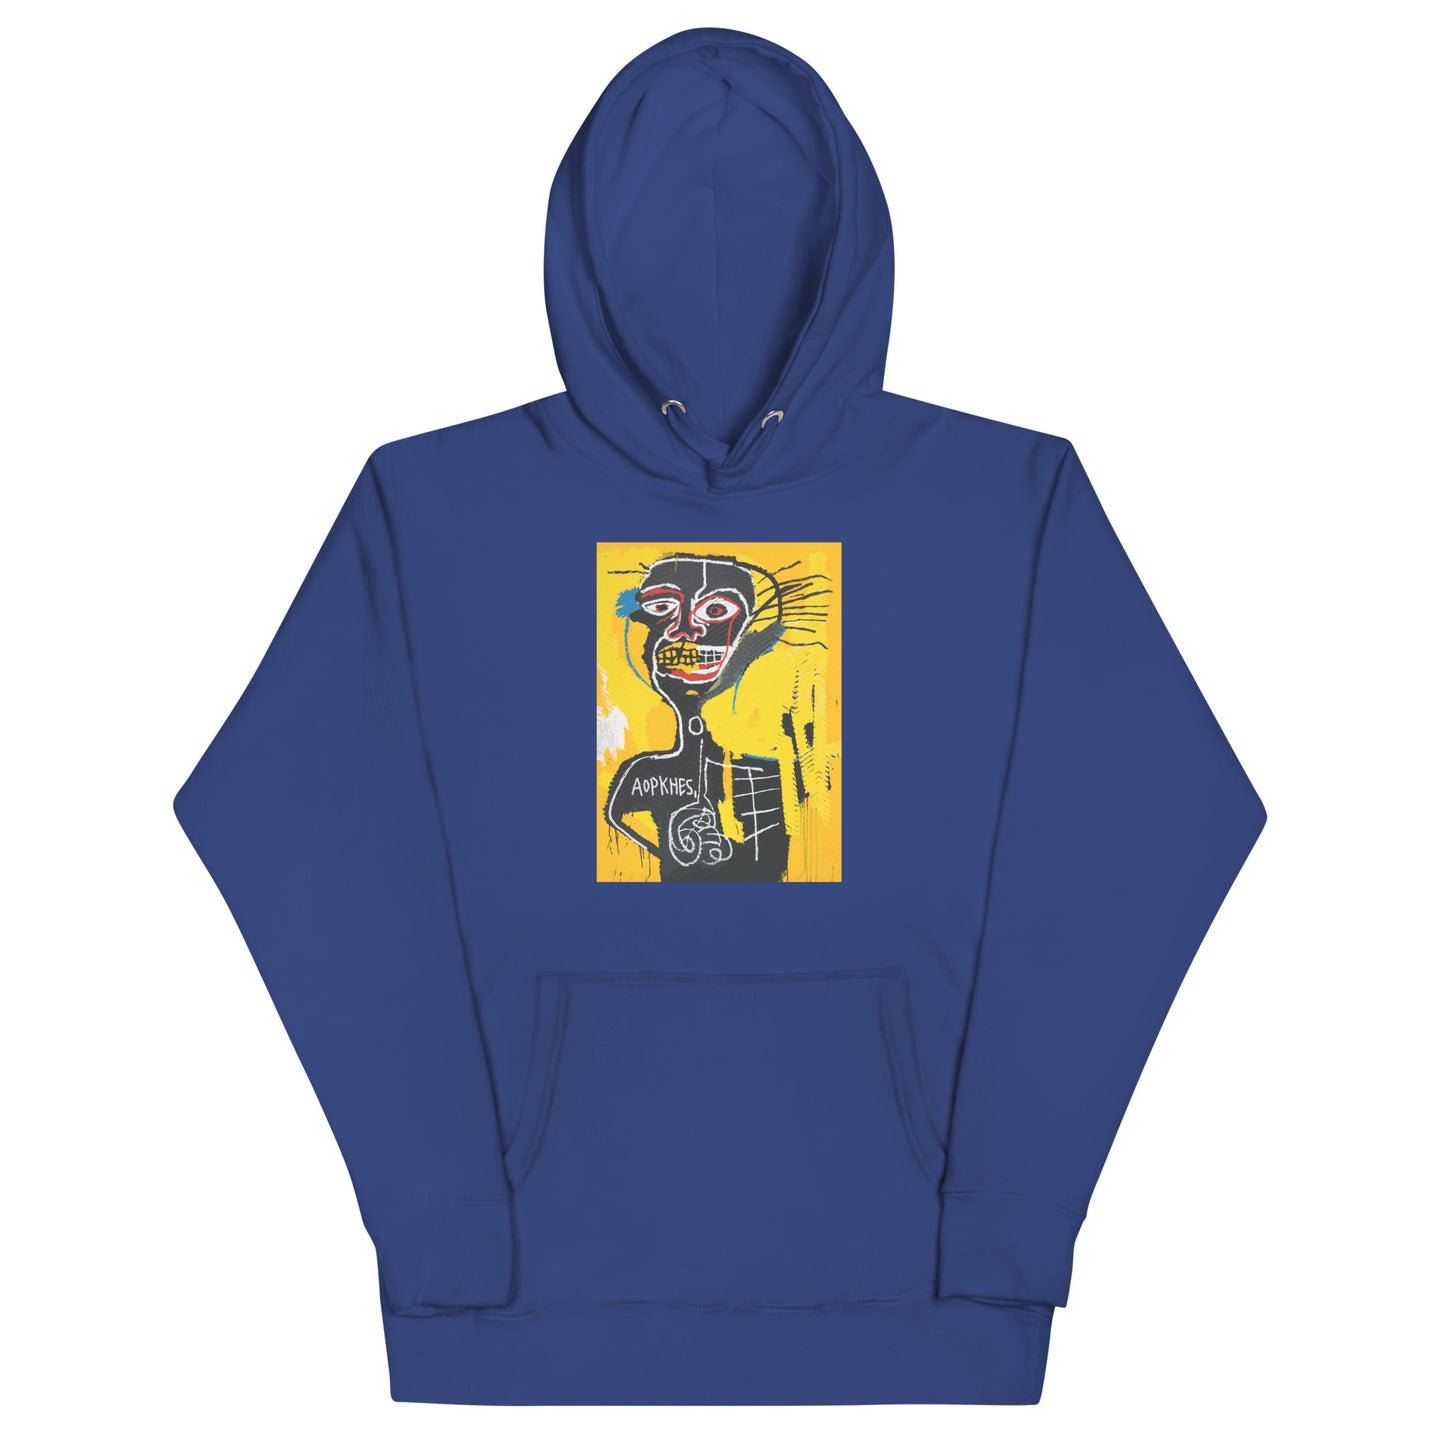 Jean-Michel Basquiat "Cabeza" Artwork Printed Premium Streetwear Sweatshirt Hoodie Royal Blue